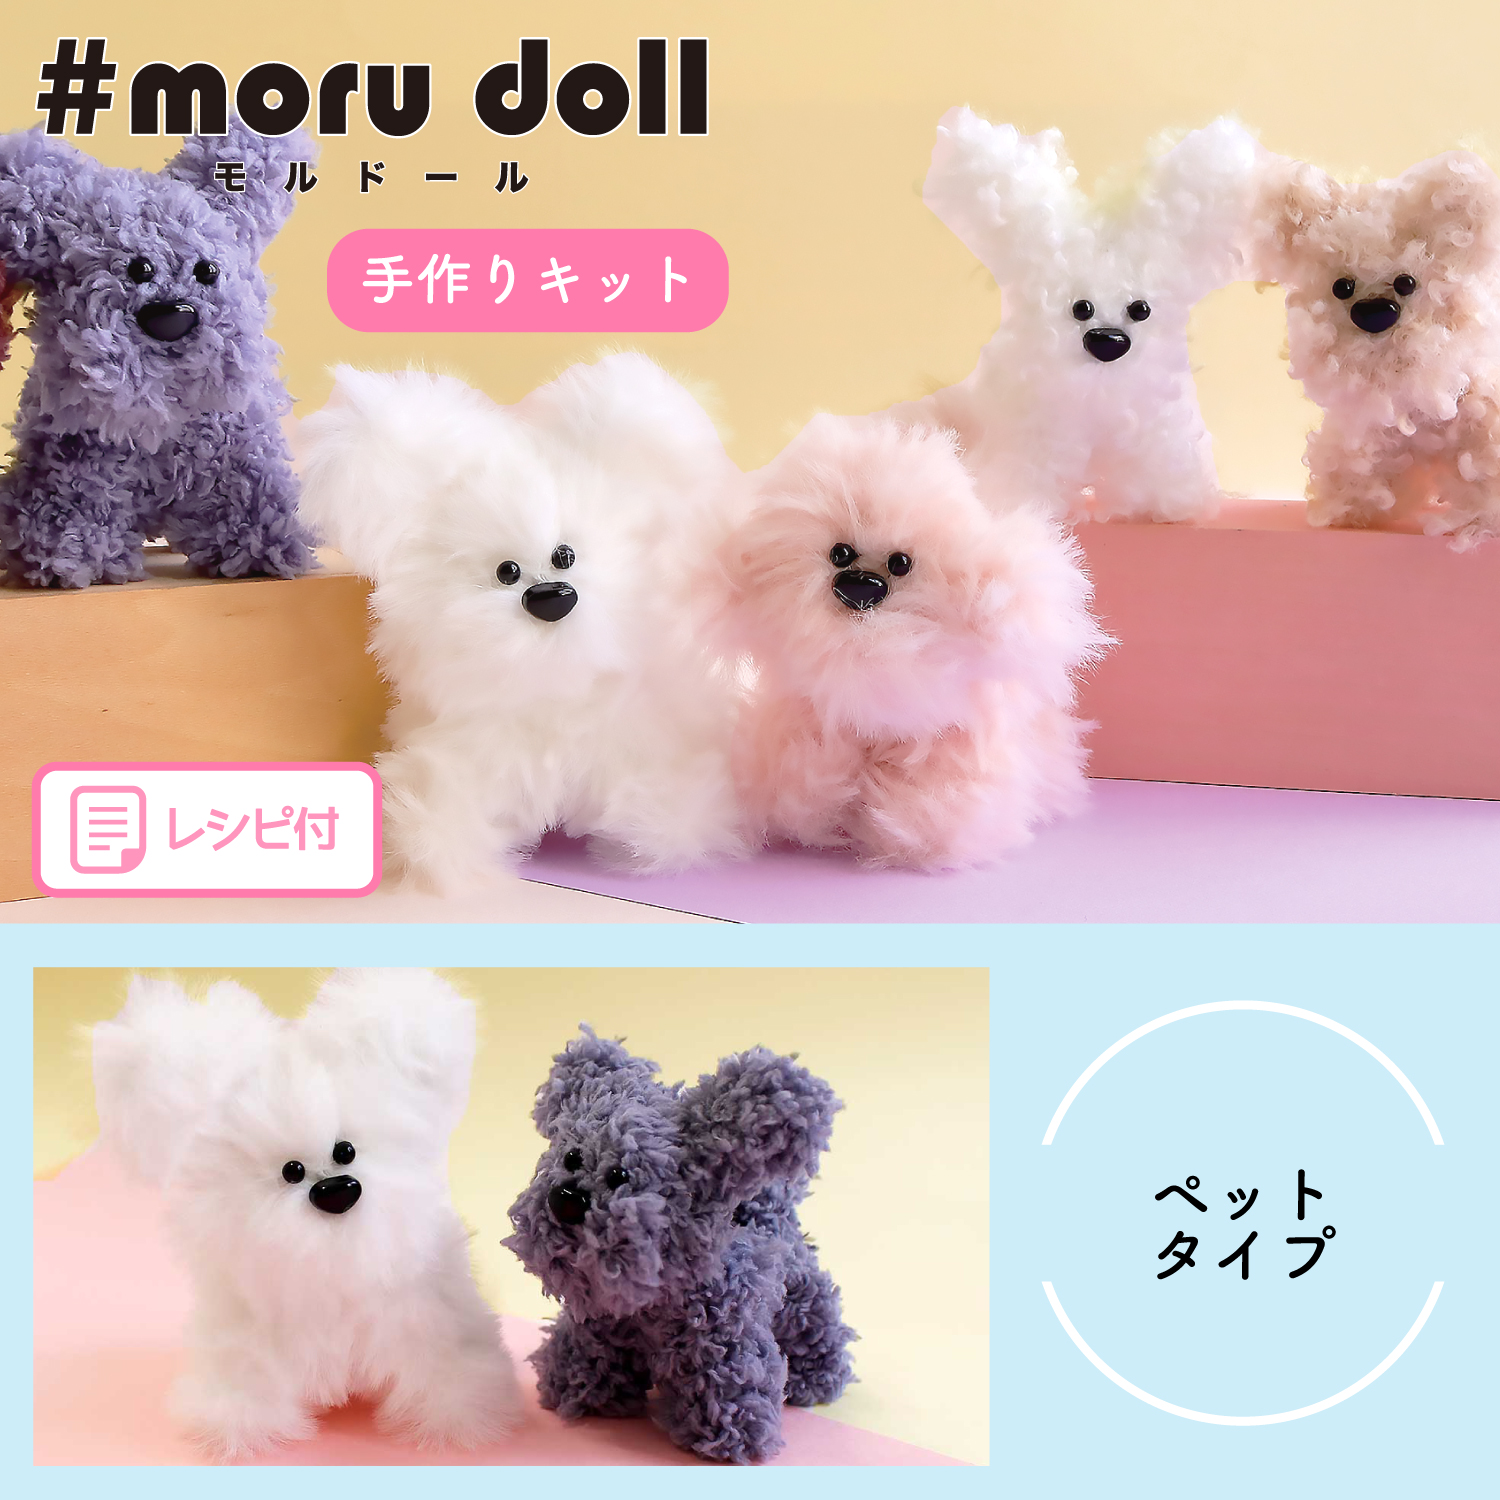 MOL-KIT Moll doll Korean miscellaneous goods Moldoll kit (bag)